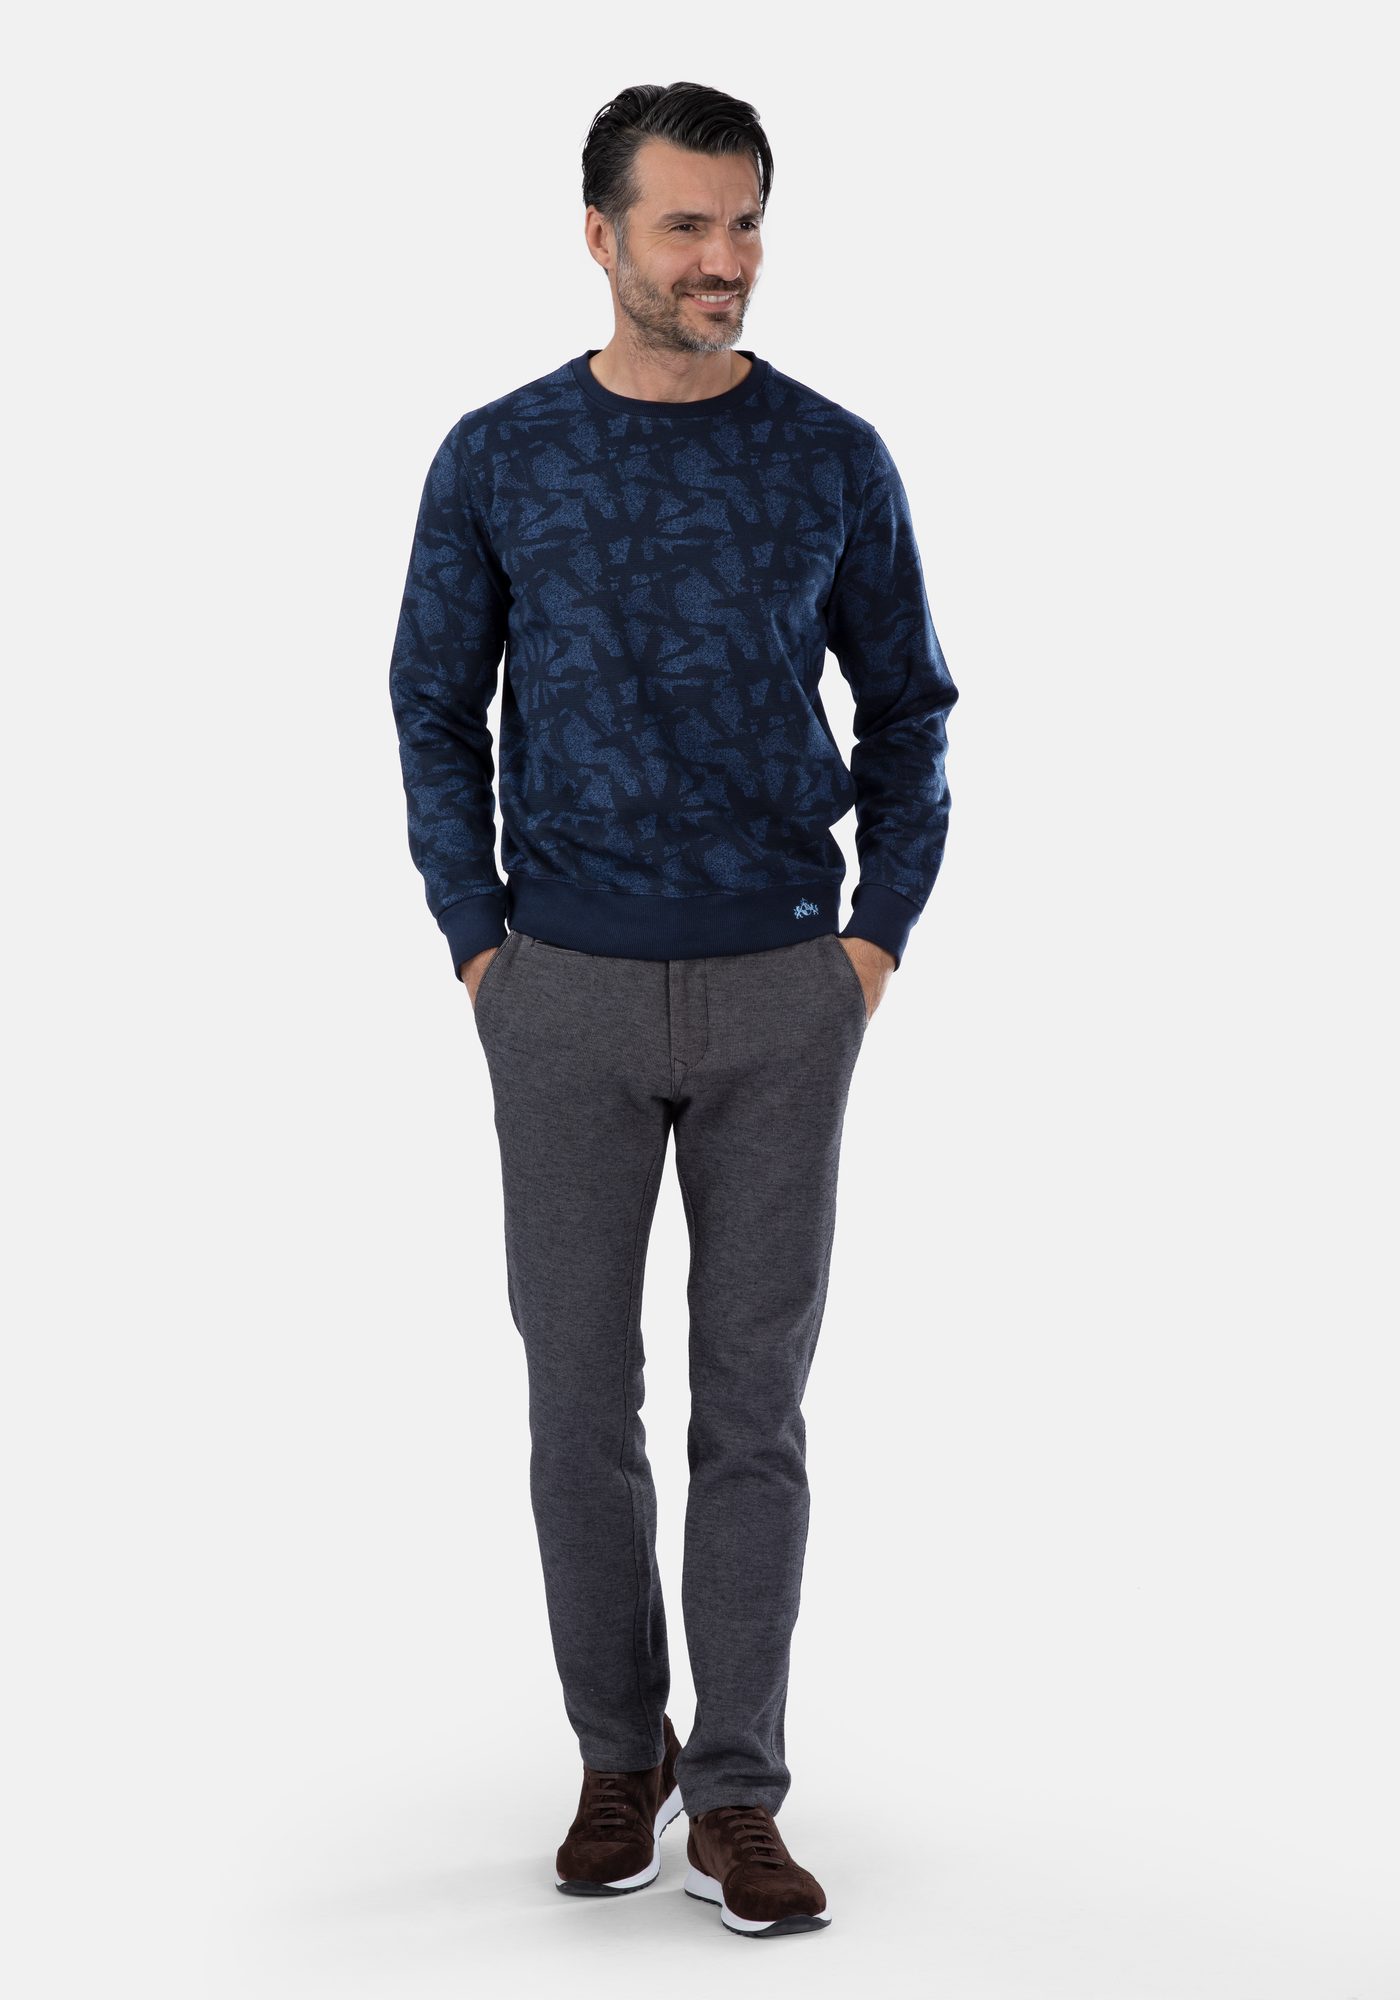 Navy Blue Cotton Sweatshirt